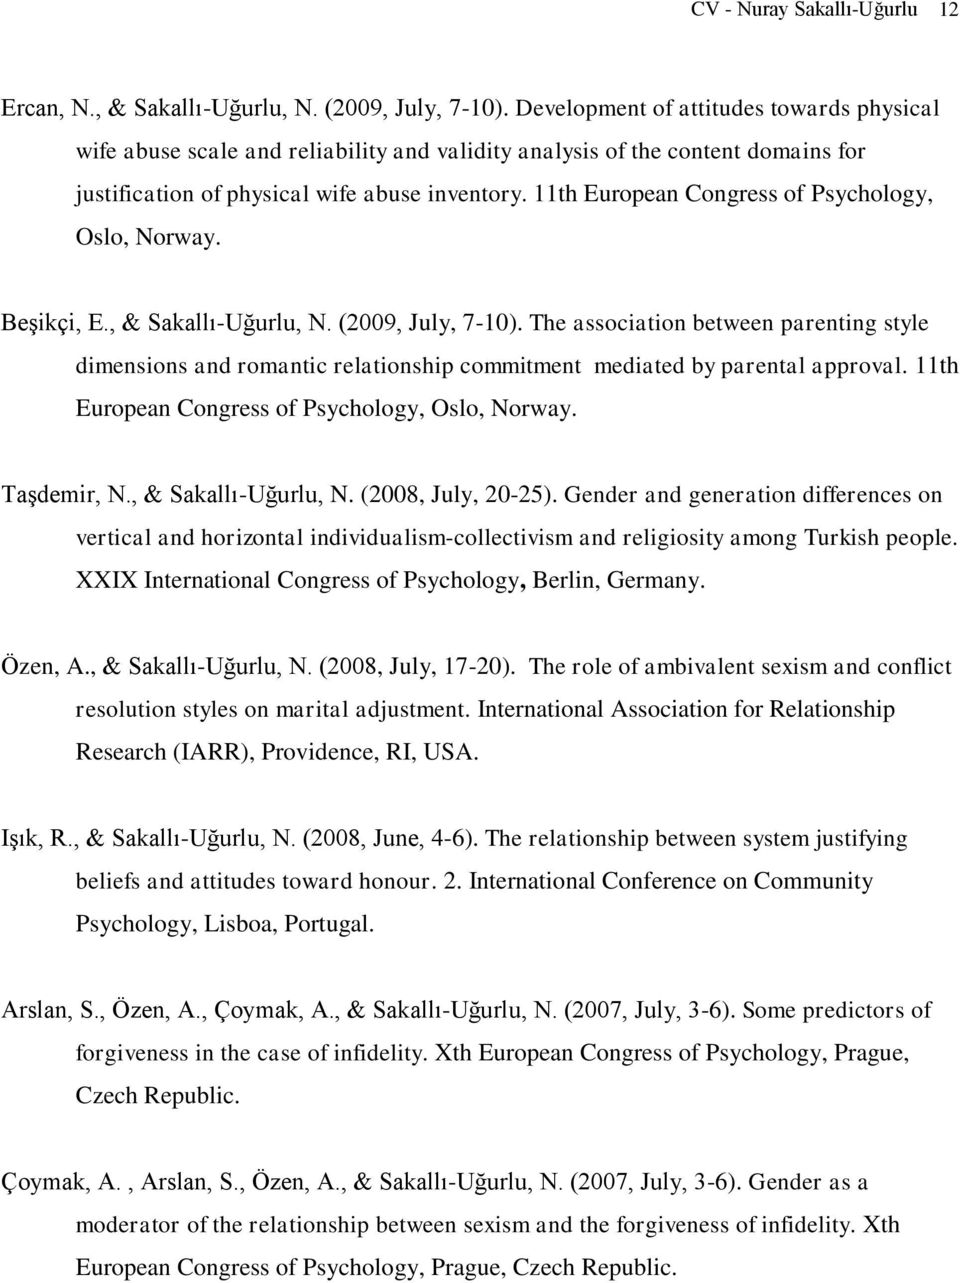 11th European Congress of Psychology, Oslo, Norway. Beşikçi, E., & Sakallı-Uğurlu, N. (2009, July, 7-10).